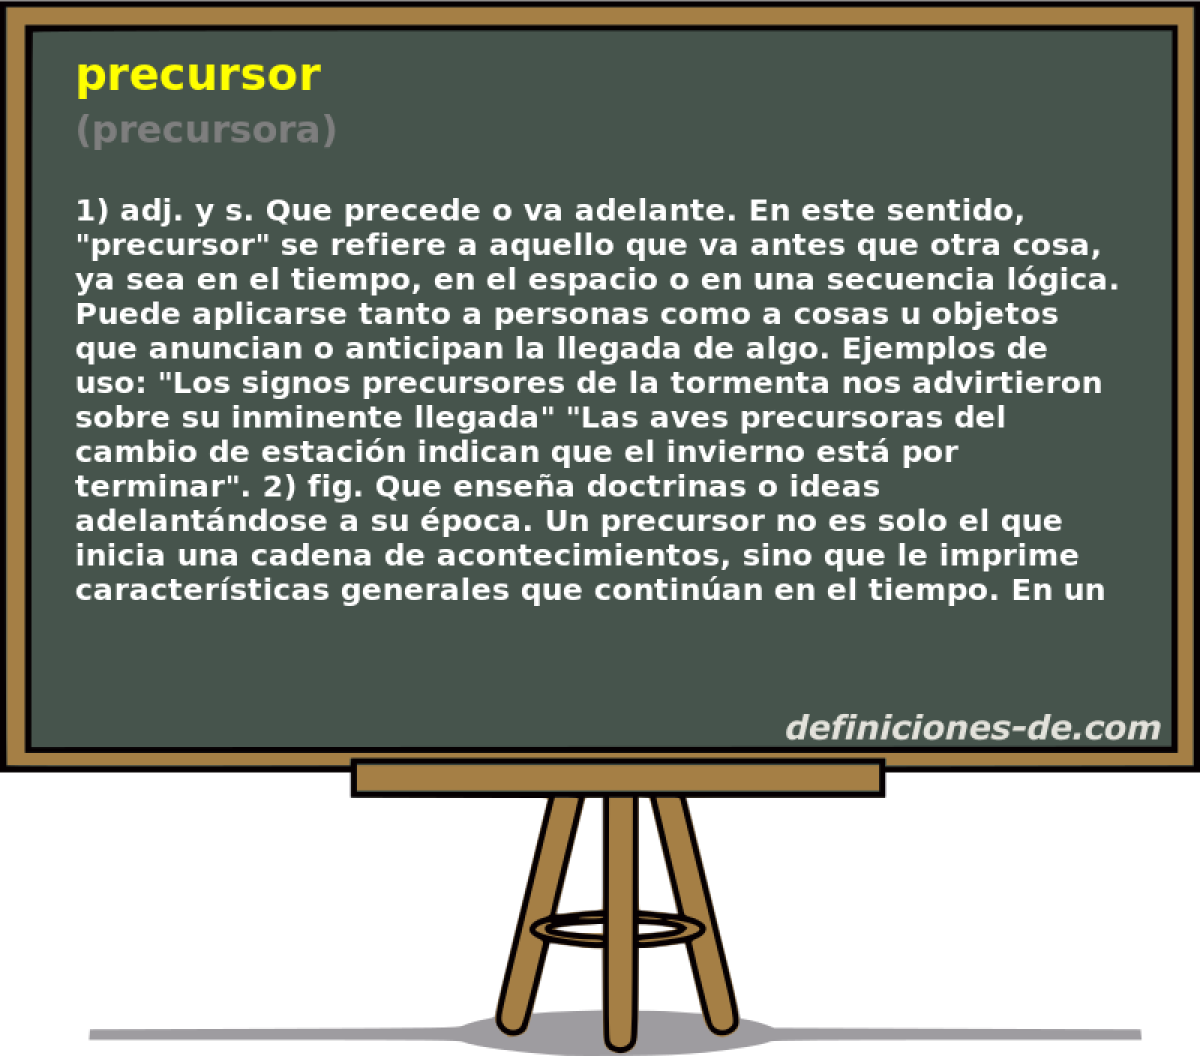 precursor (precursora)